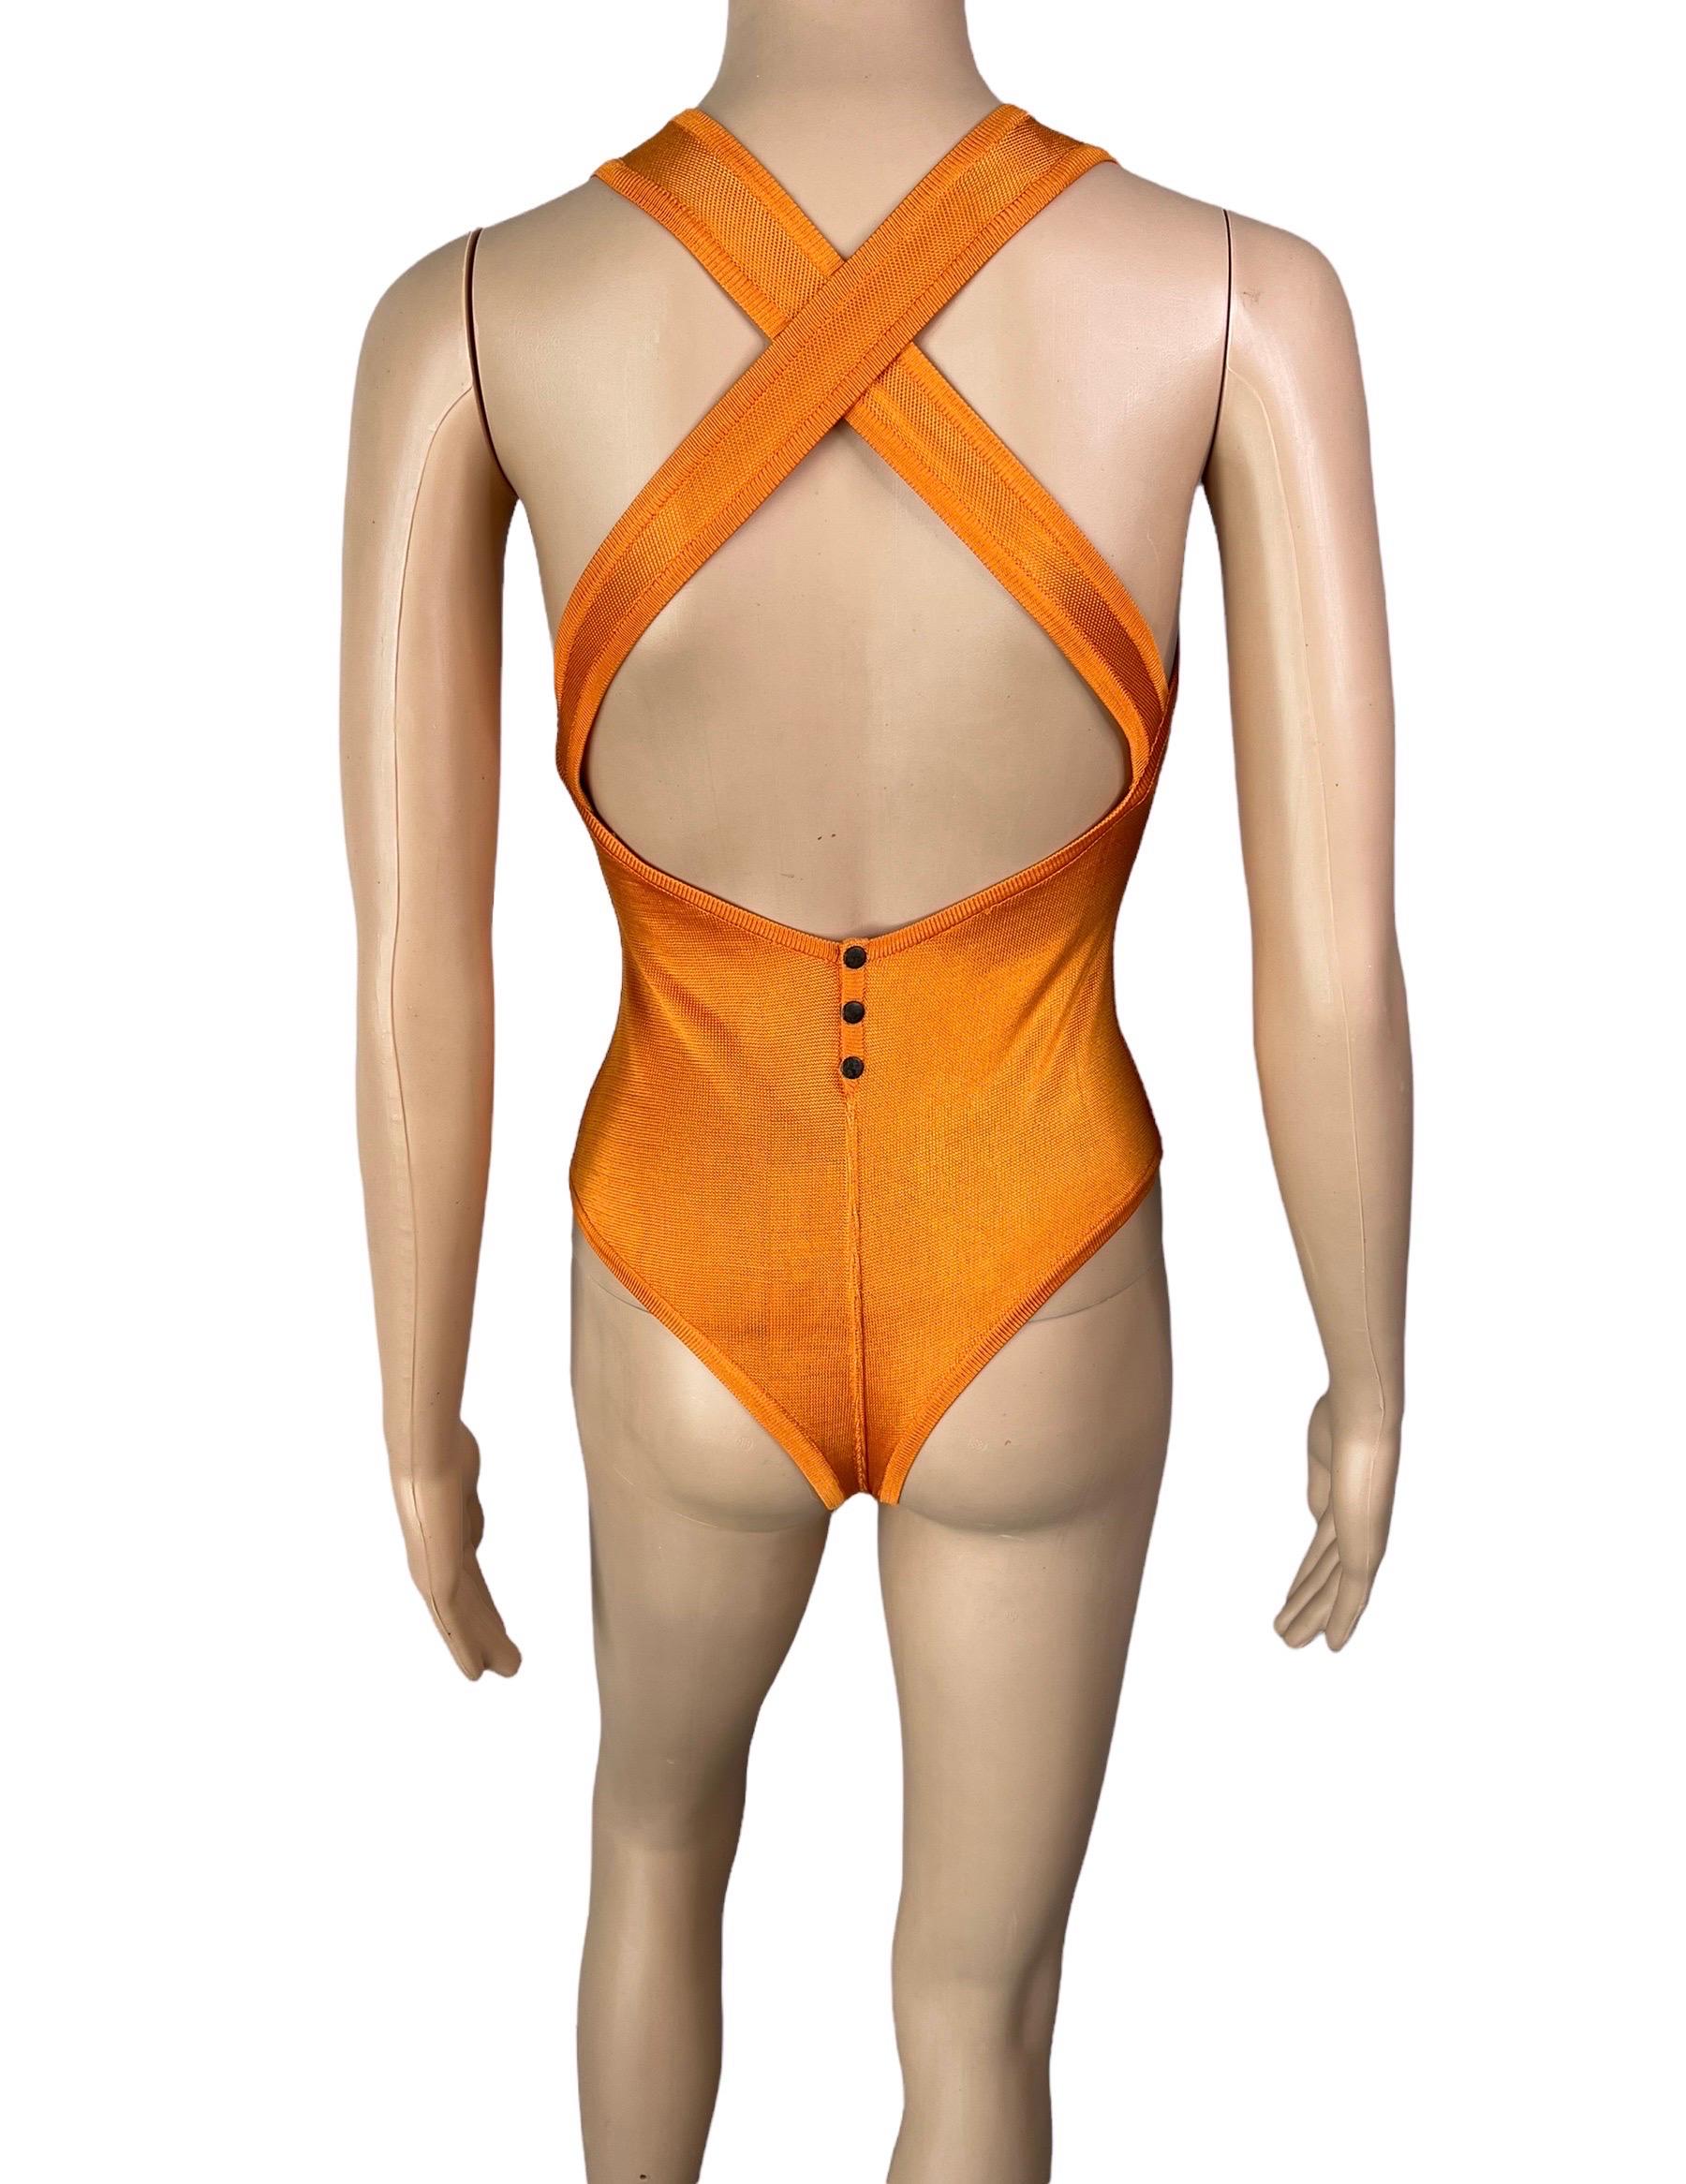 Azzedine Alaia Vintage S/S 1986 Open Back Orange Bodysuit Top Size M





